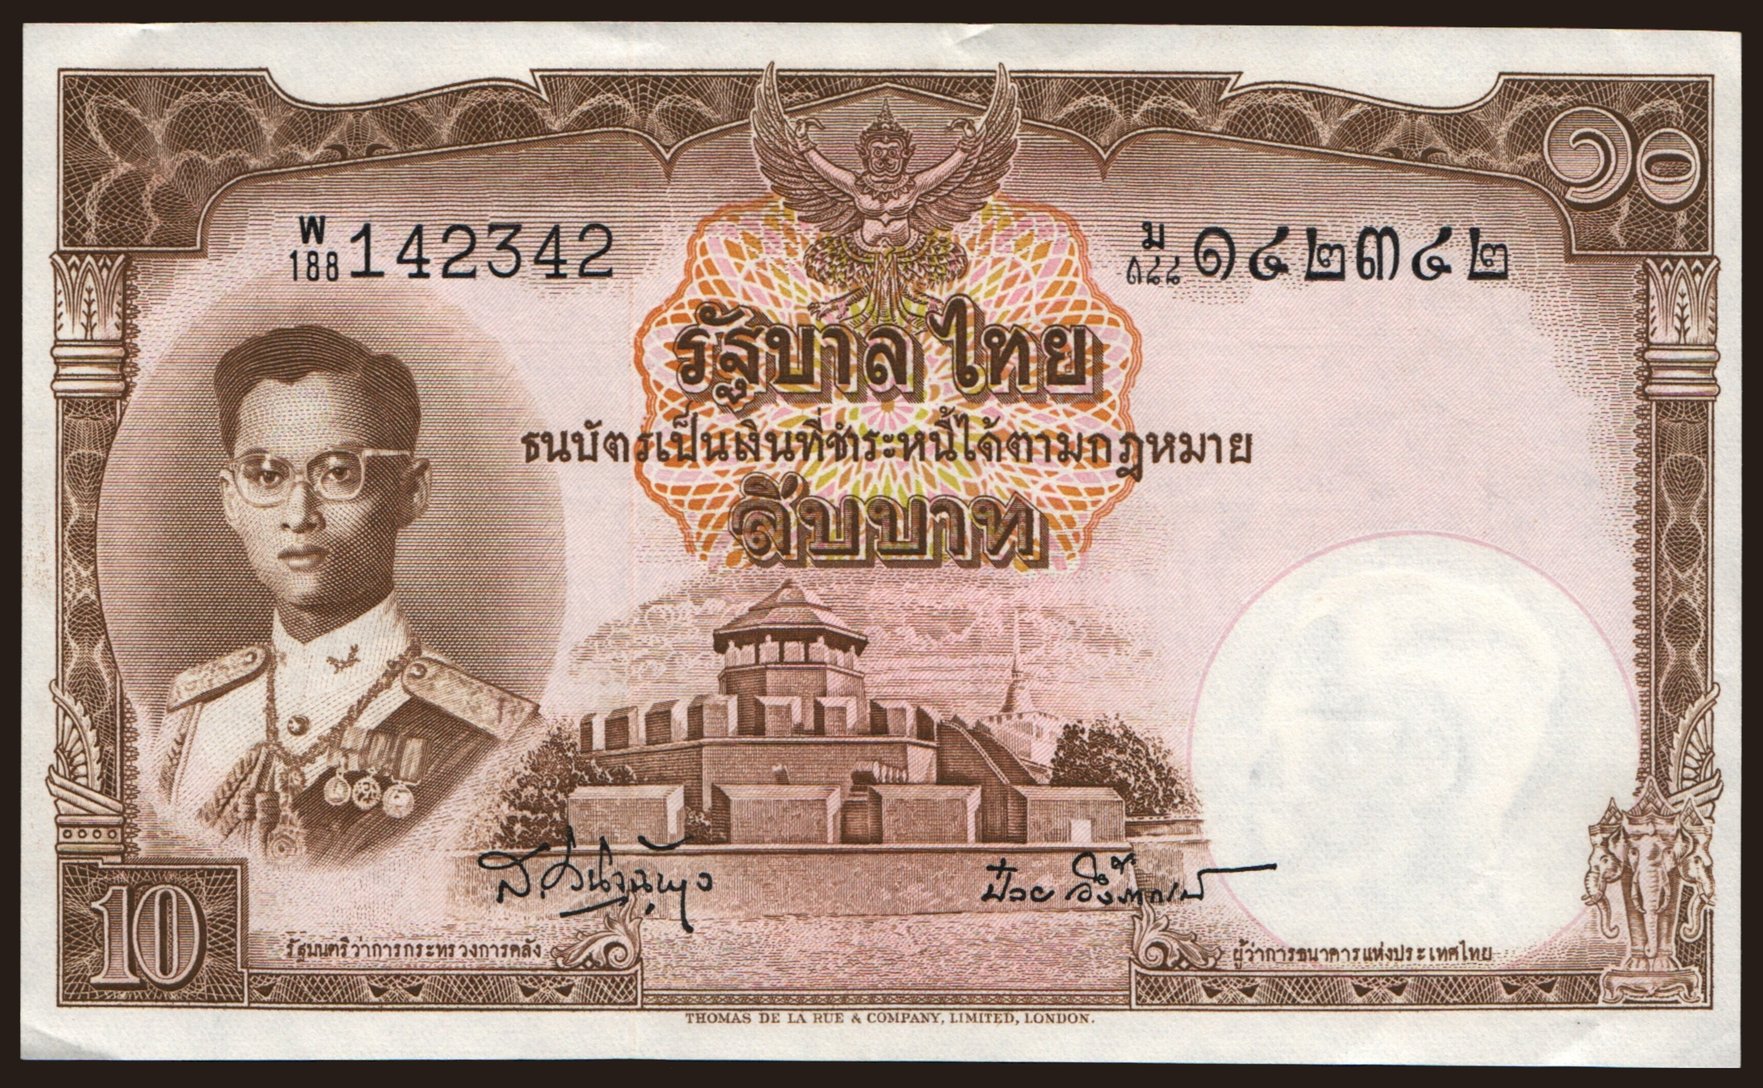 10 baht, 1953